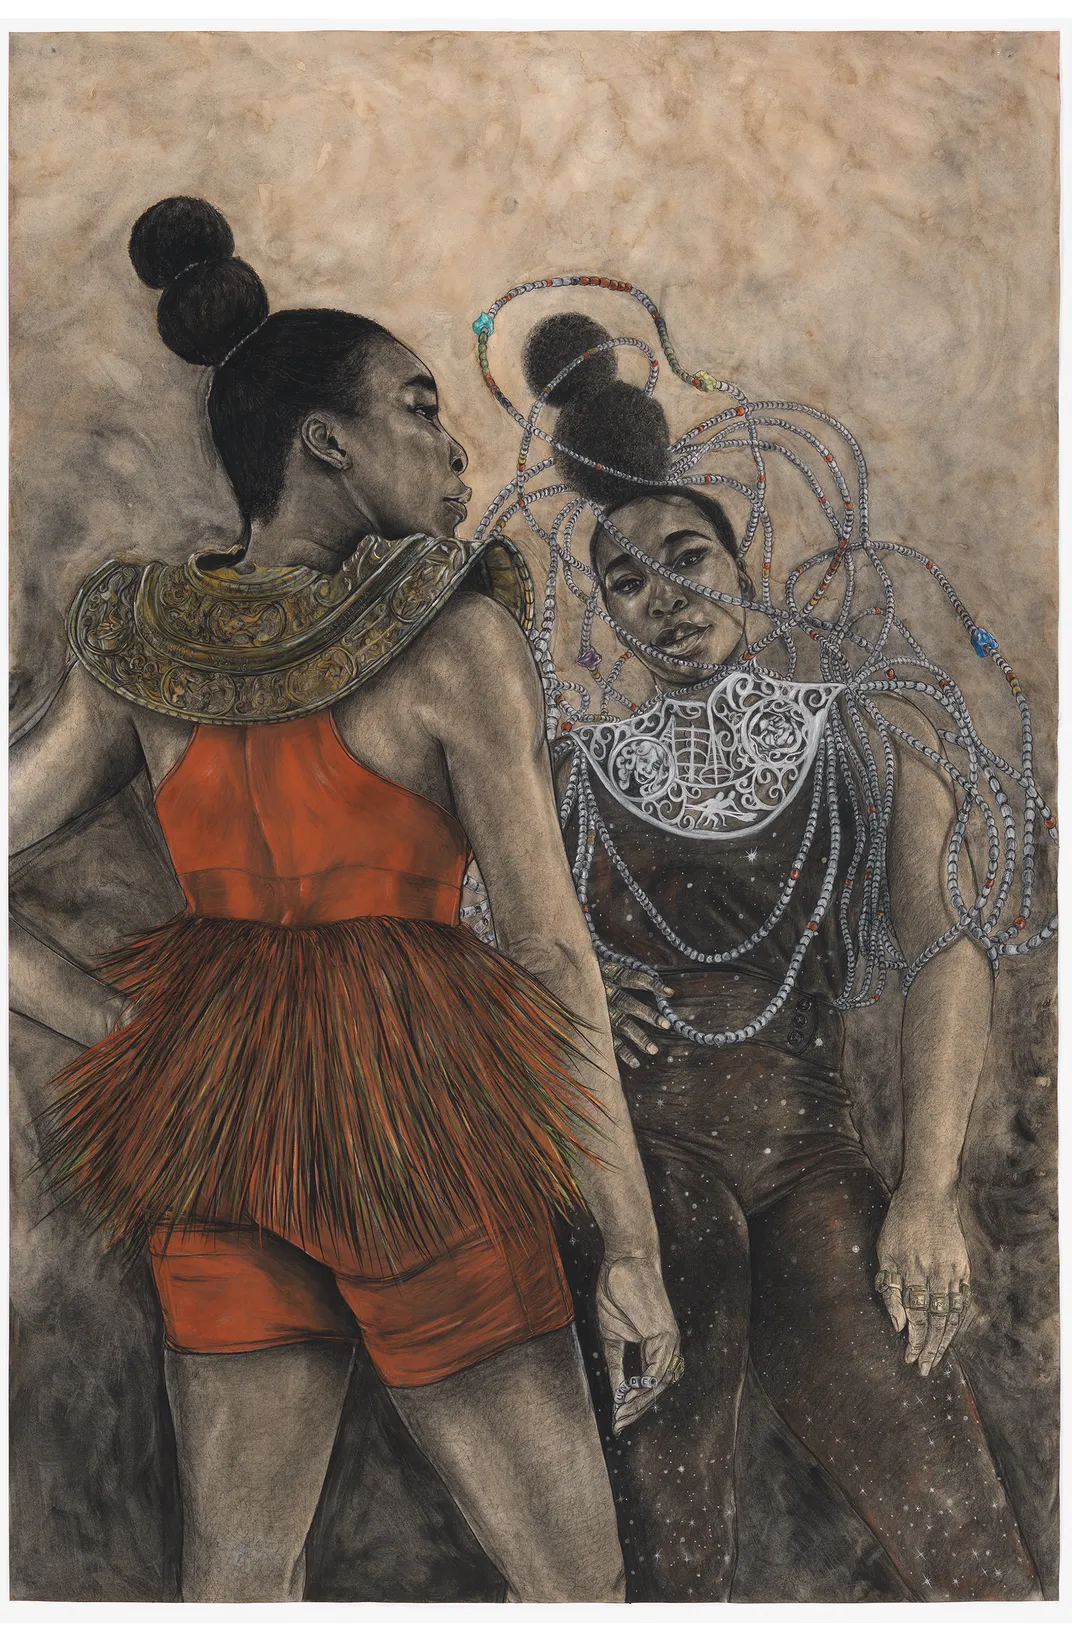 Robert Pruitt, Venus Williams, Double Portrait, 2022, conté crayon, charcoal, pastel, and coffee wash on paper